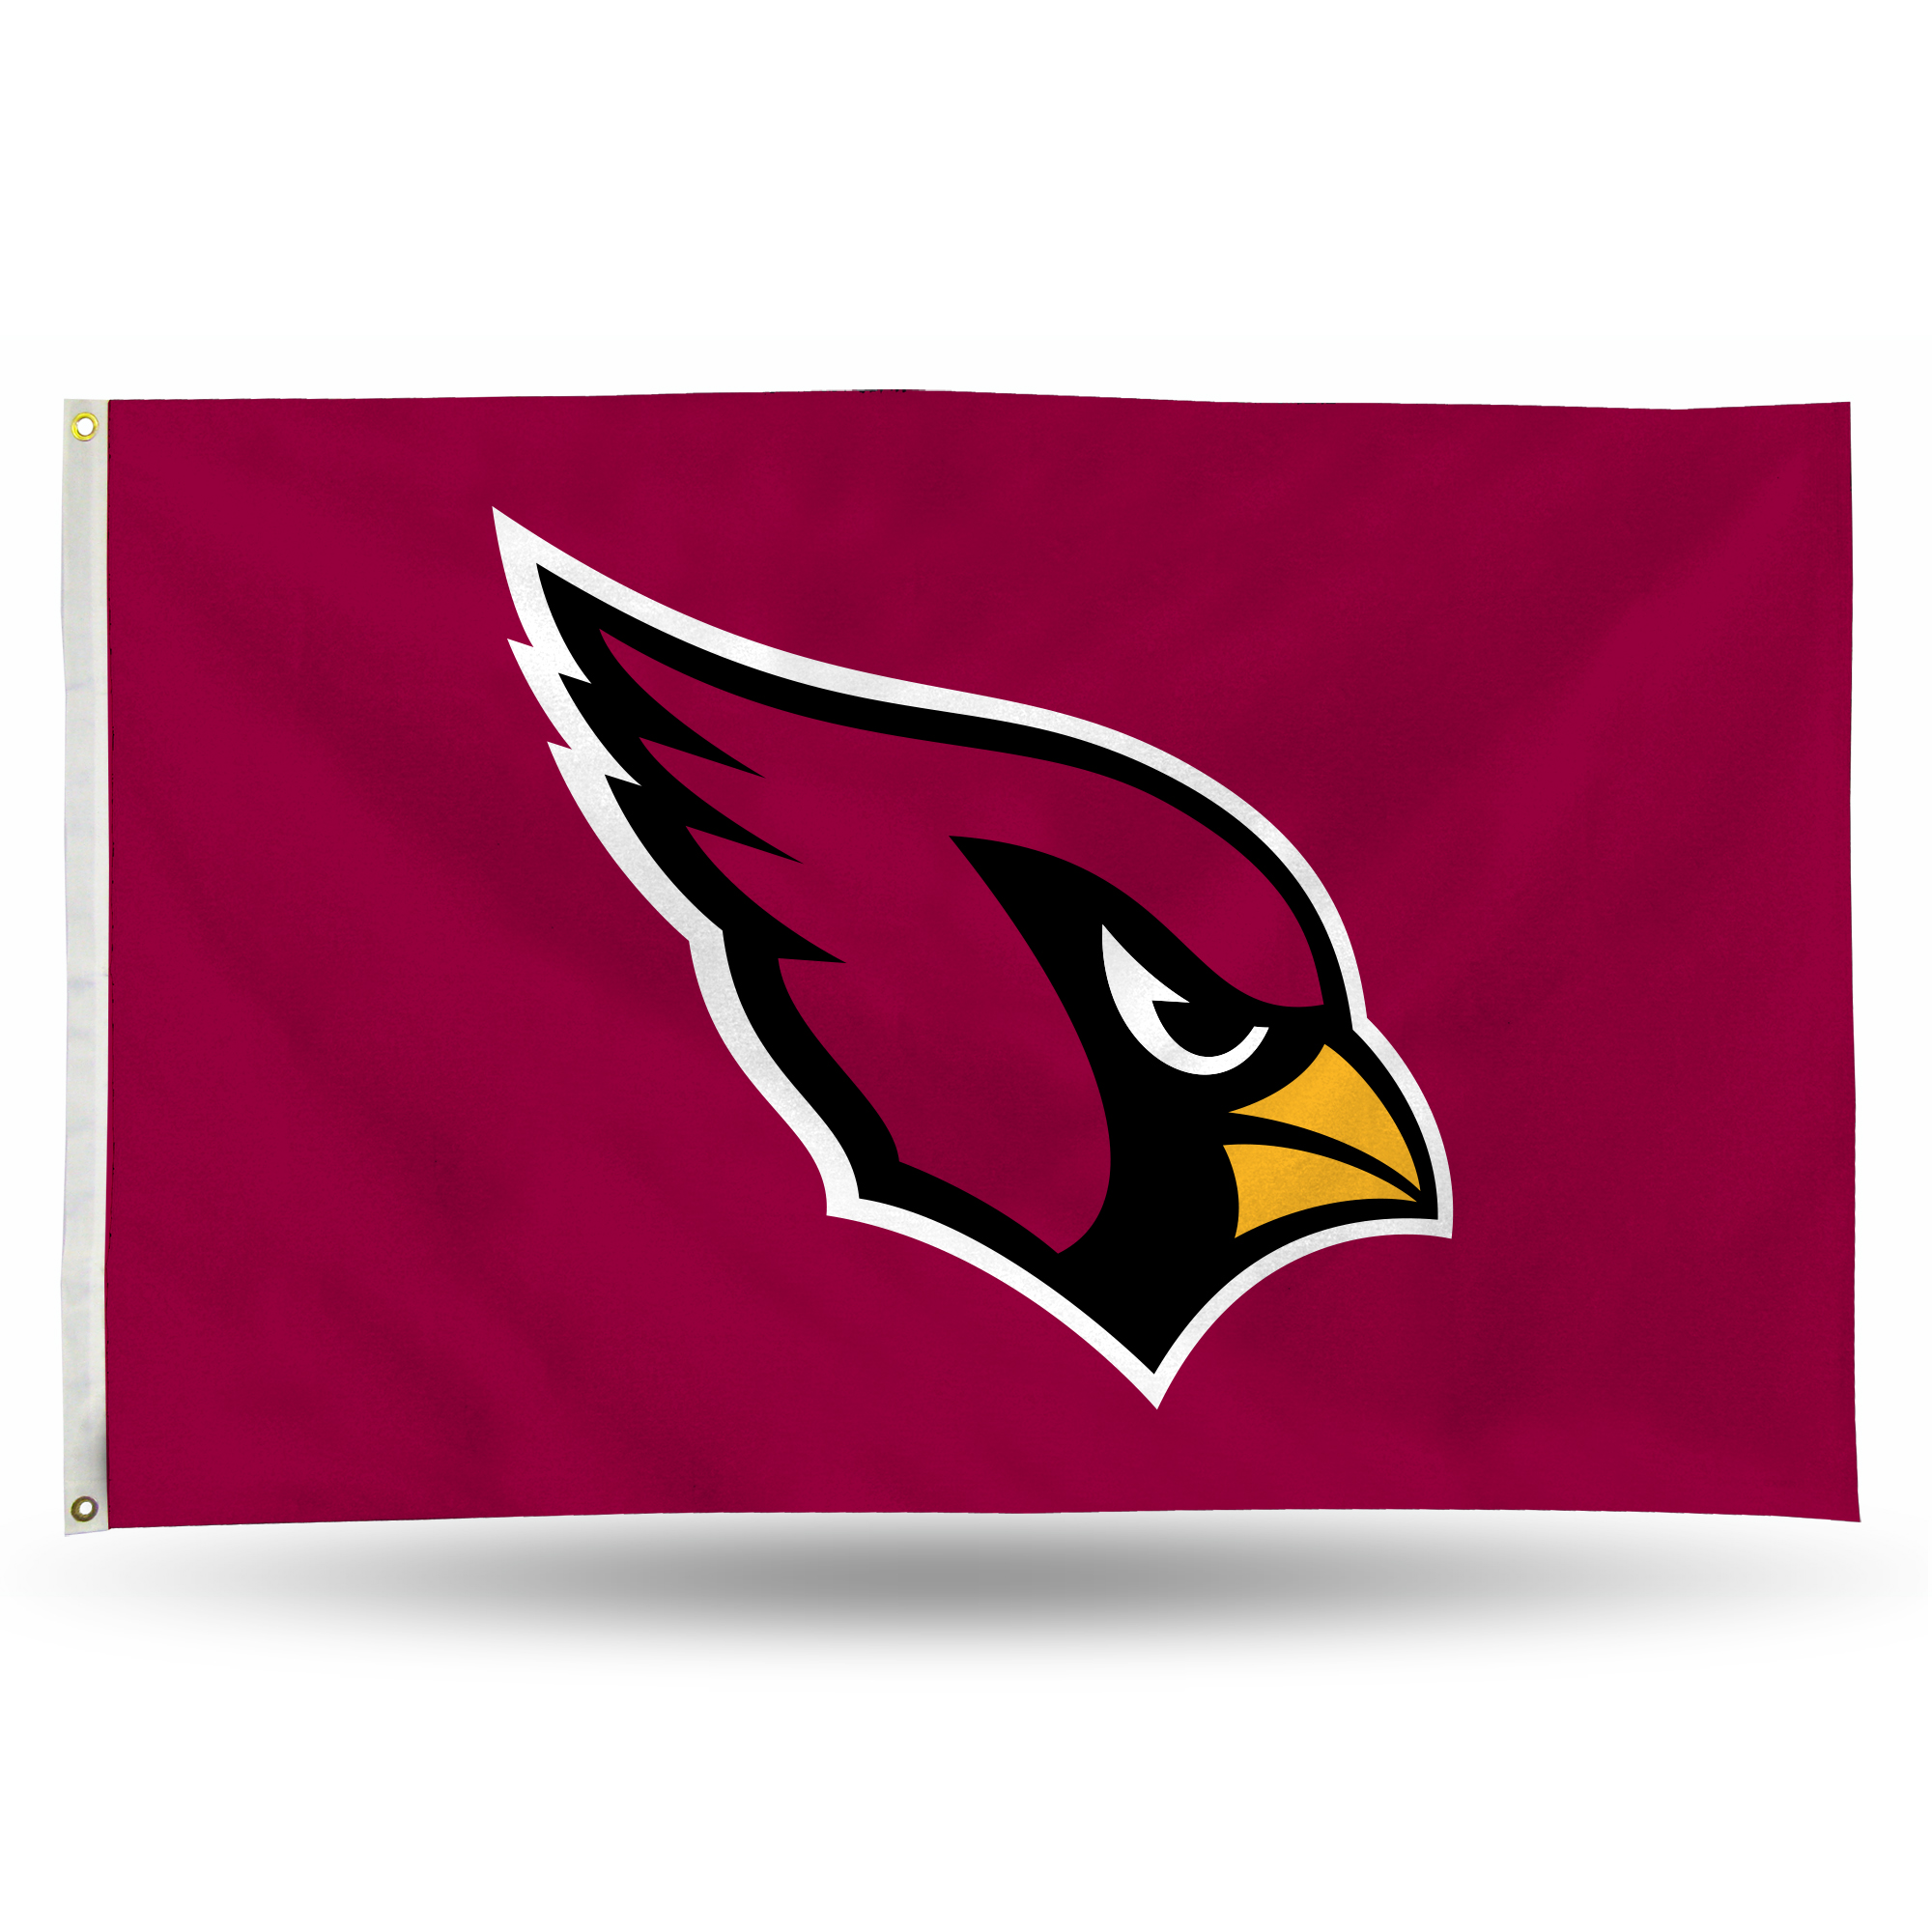 Rico 3' x 5' Red and Black NFL Arizona Cardinals Rectangular Banner Flag